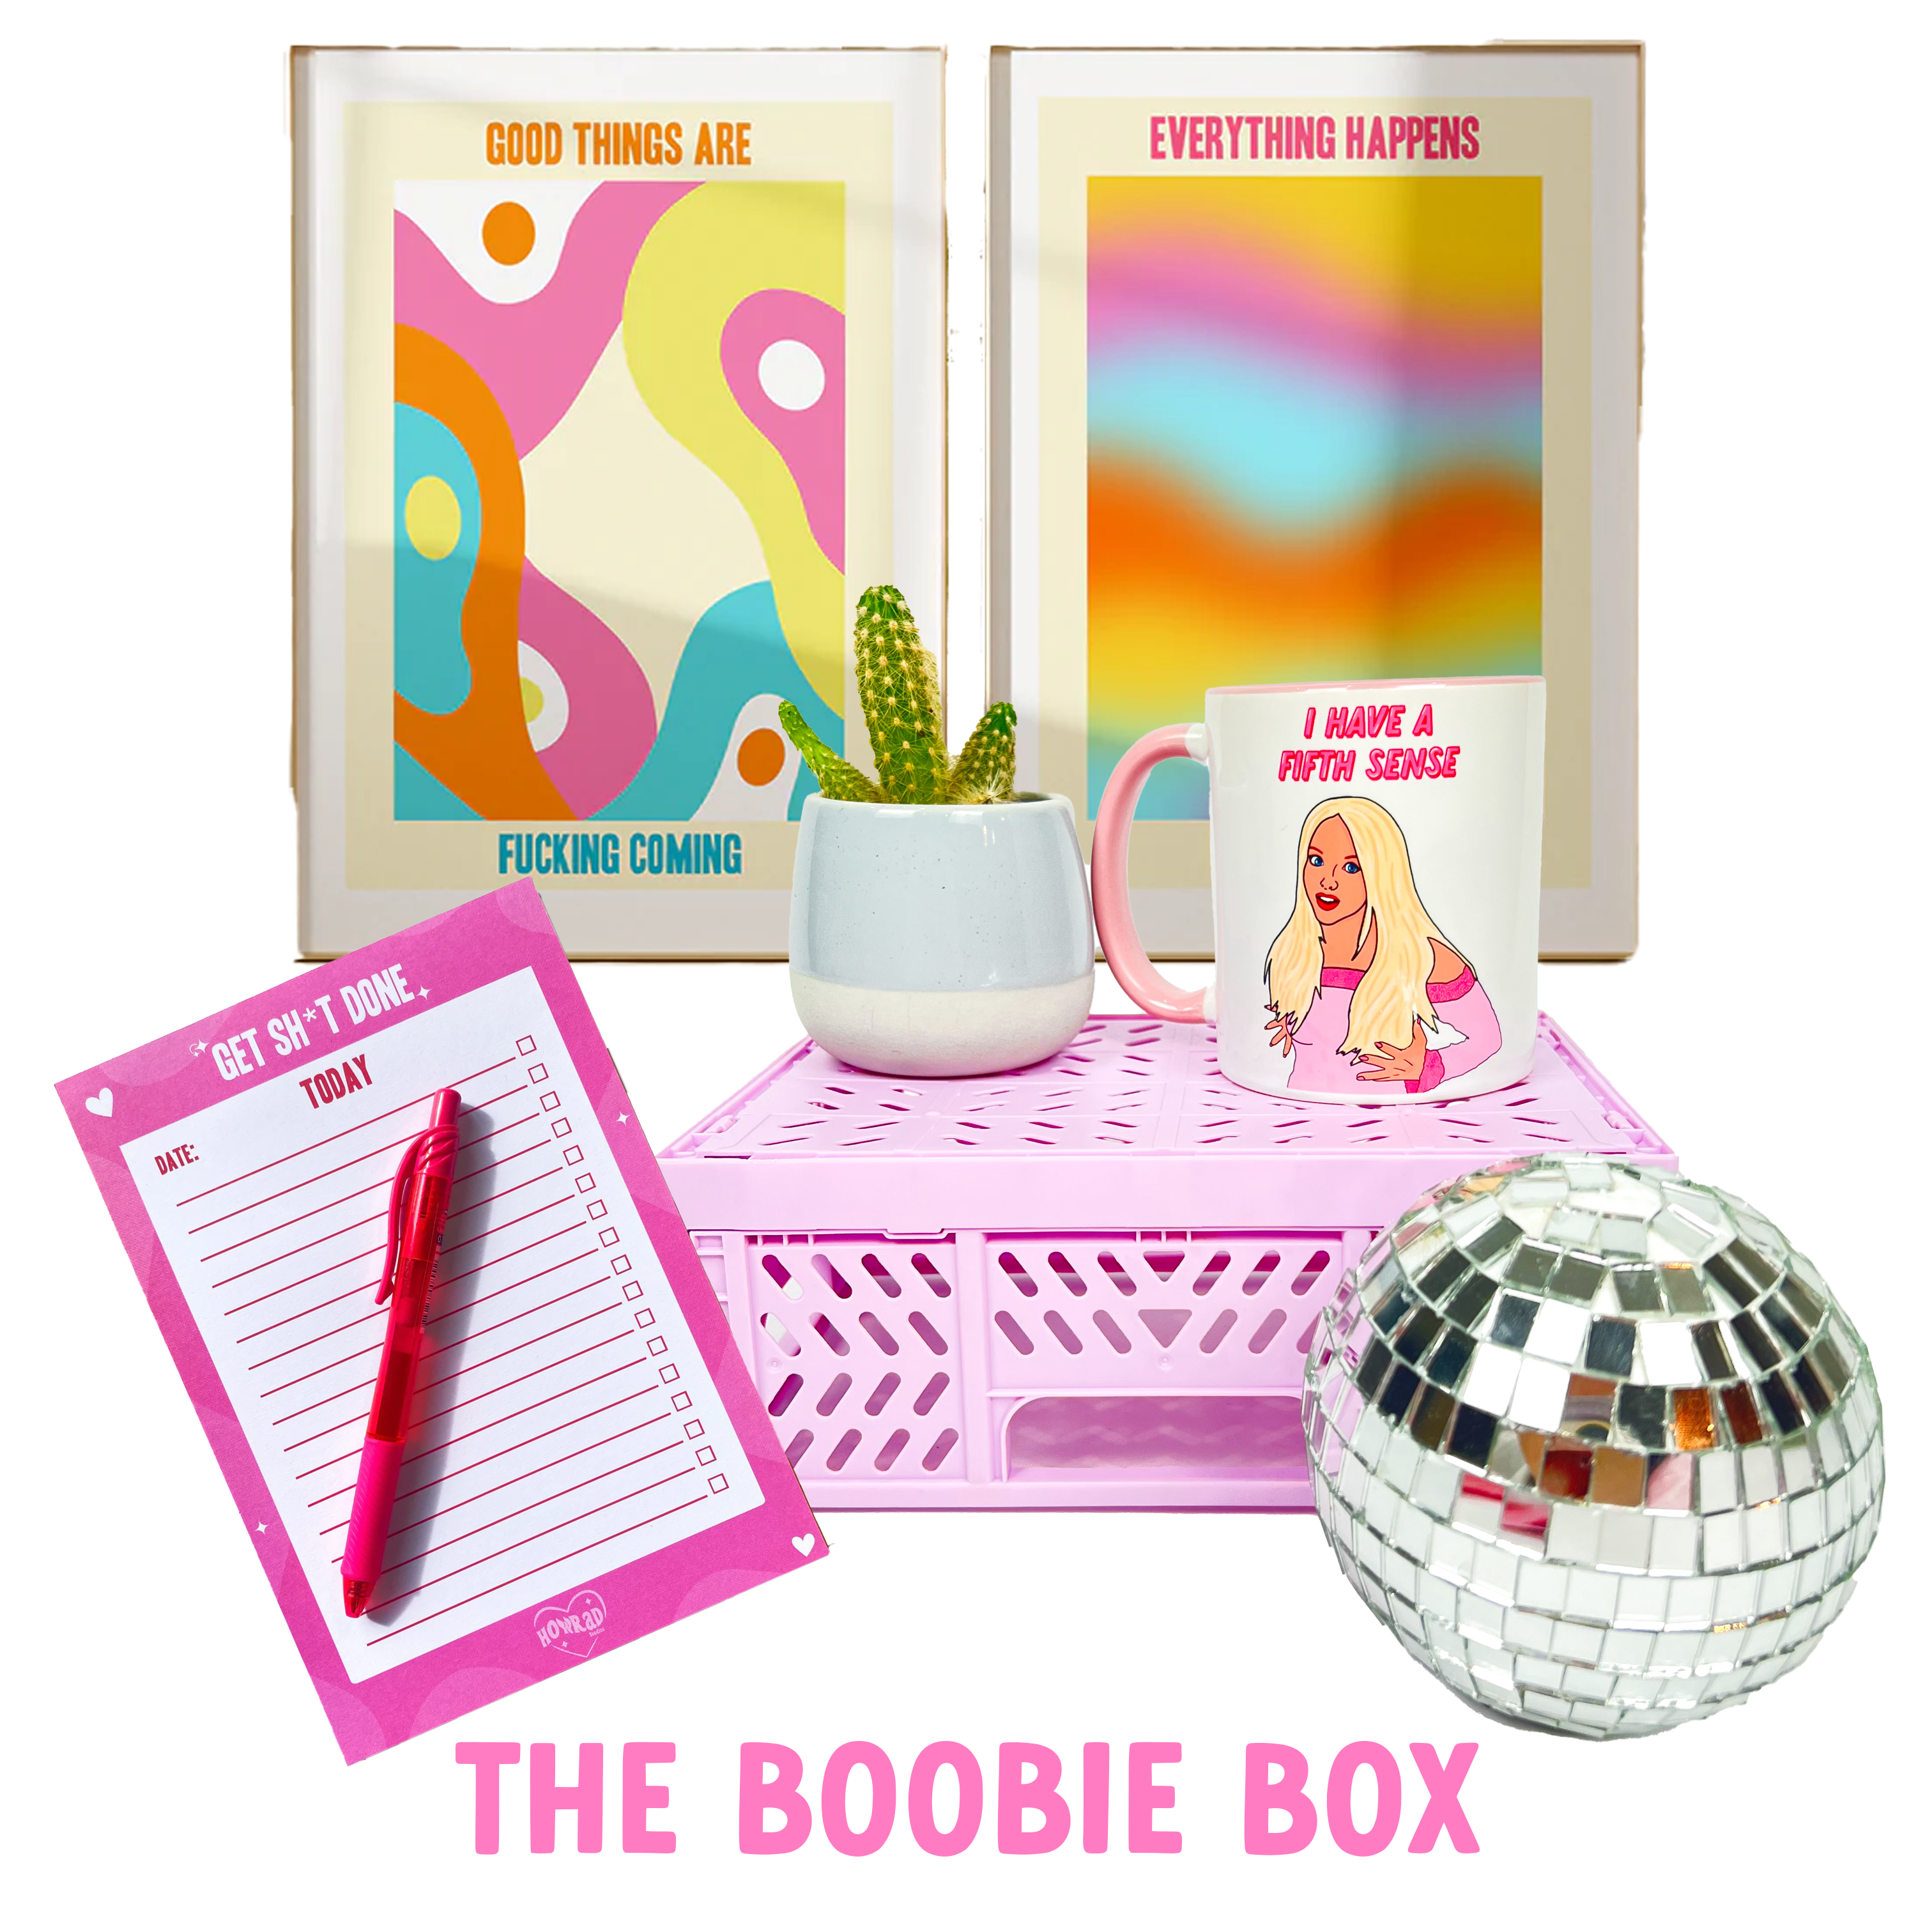 The Boobie Box